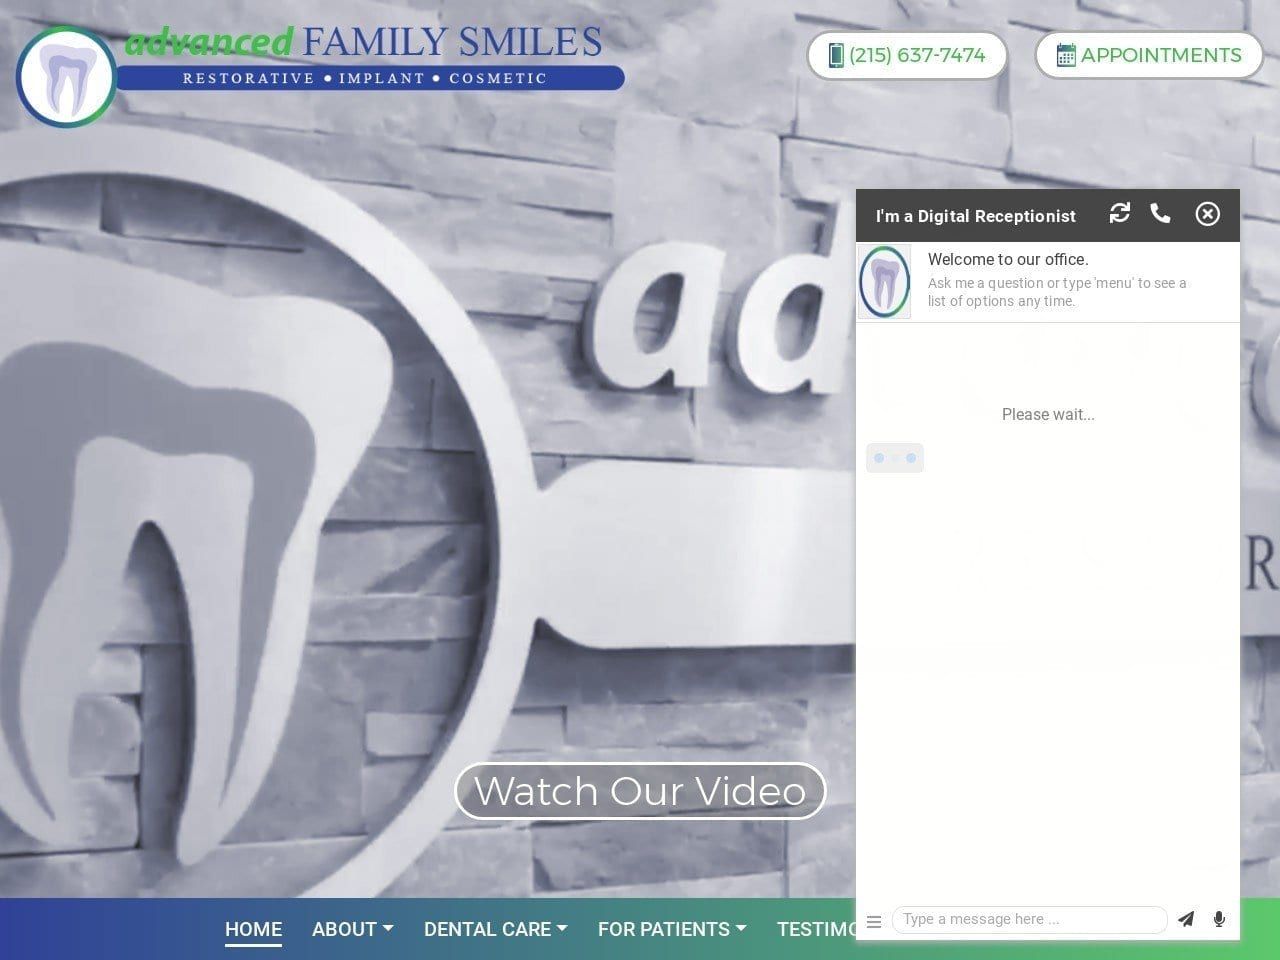 Advanced Family Smiles Website Screenshot from afspc.com